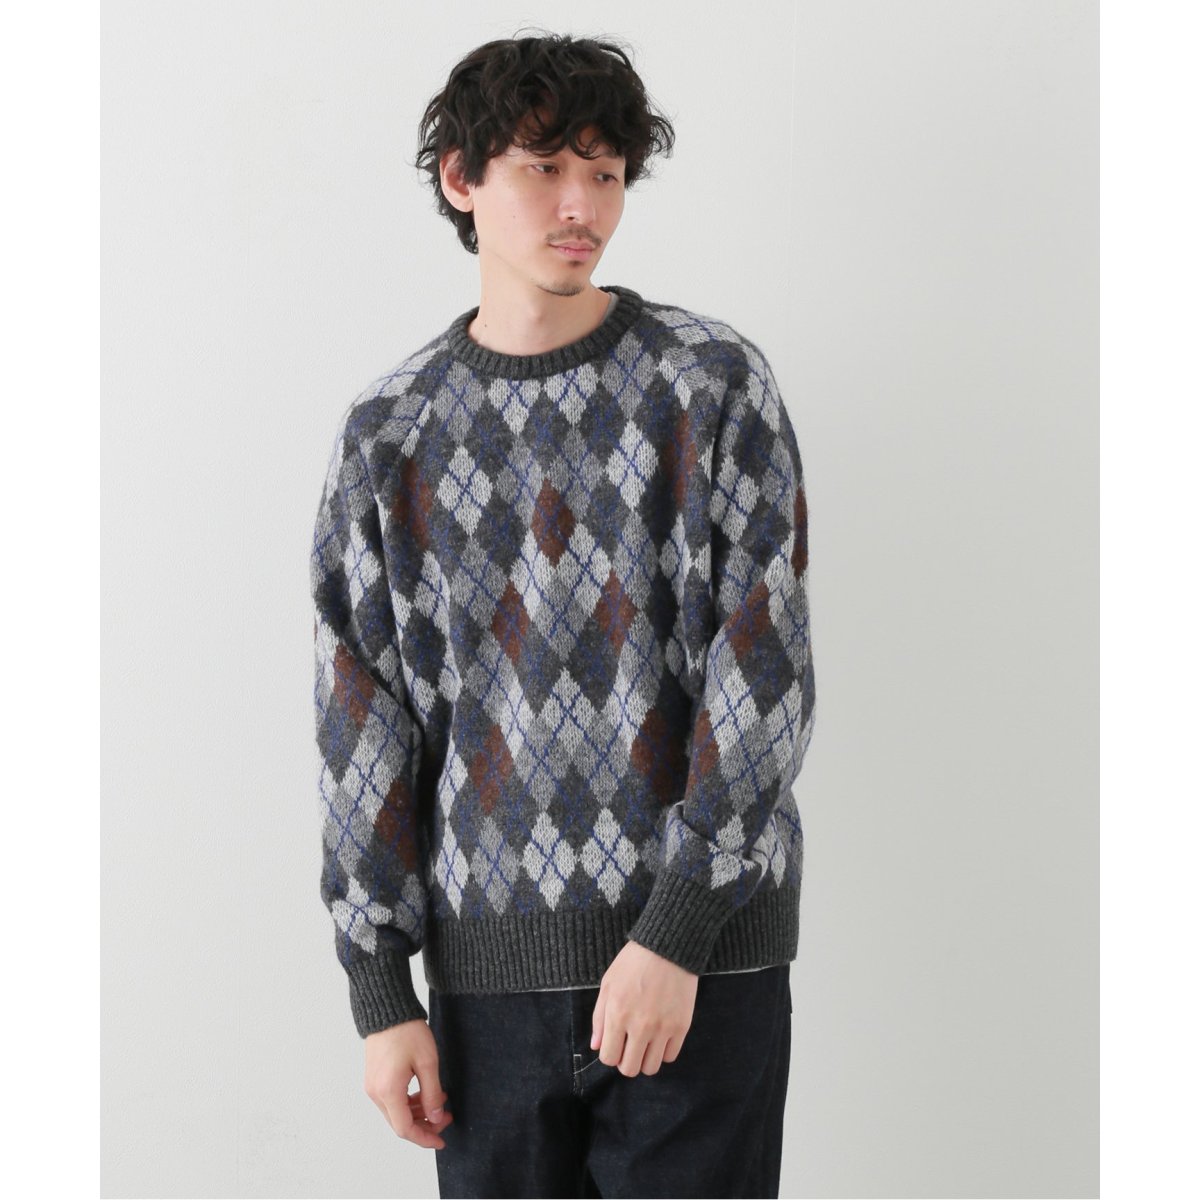 POP TRADING COMPANY】burlington knitted | ジャーナルスタンダード